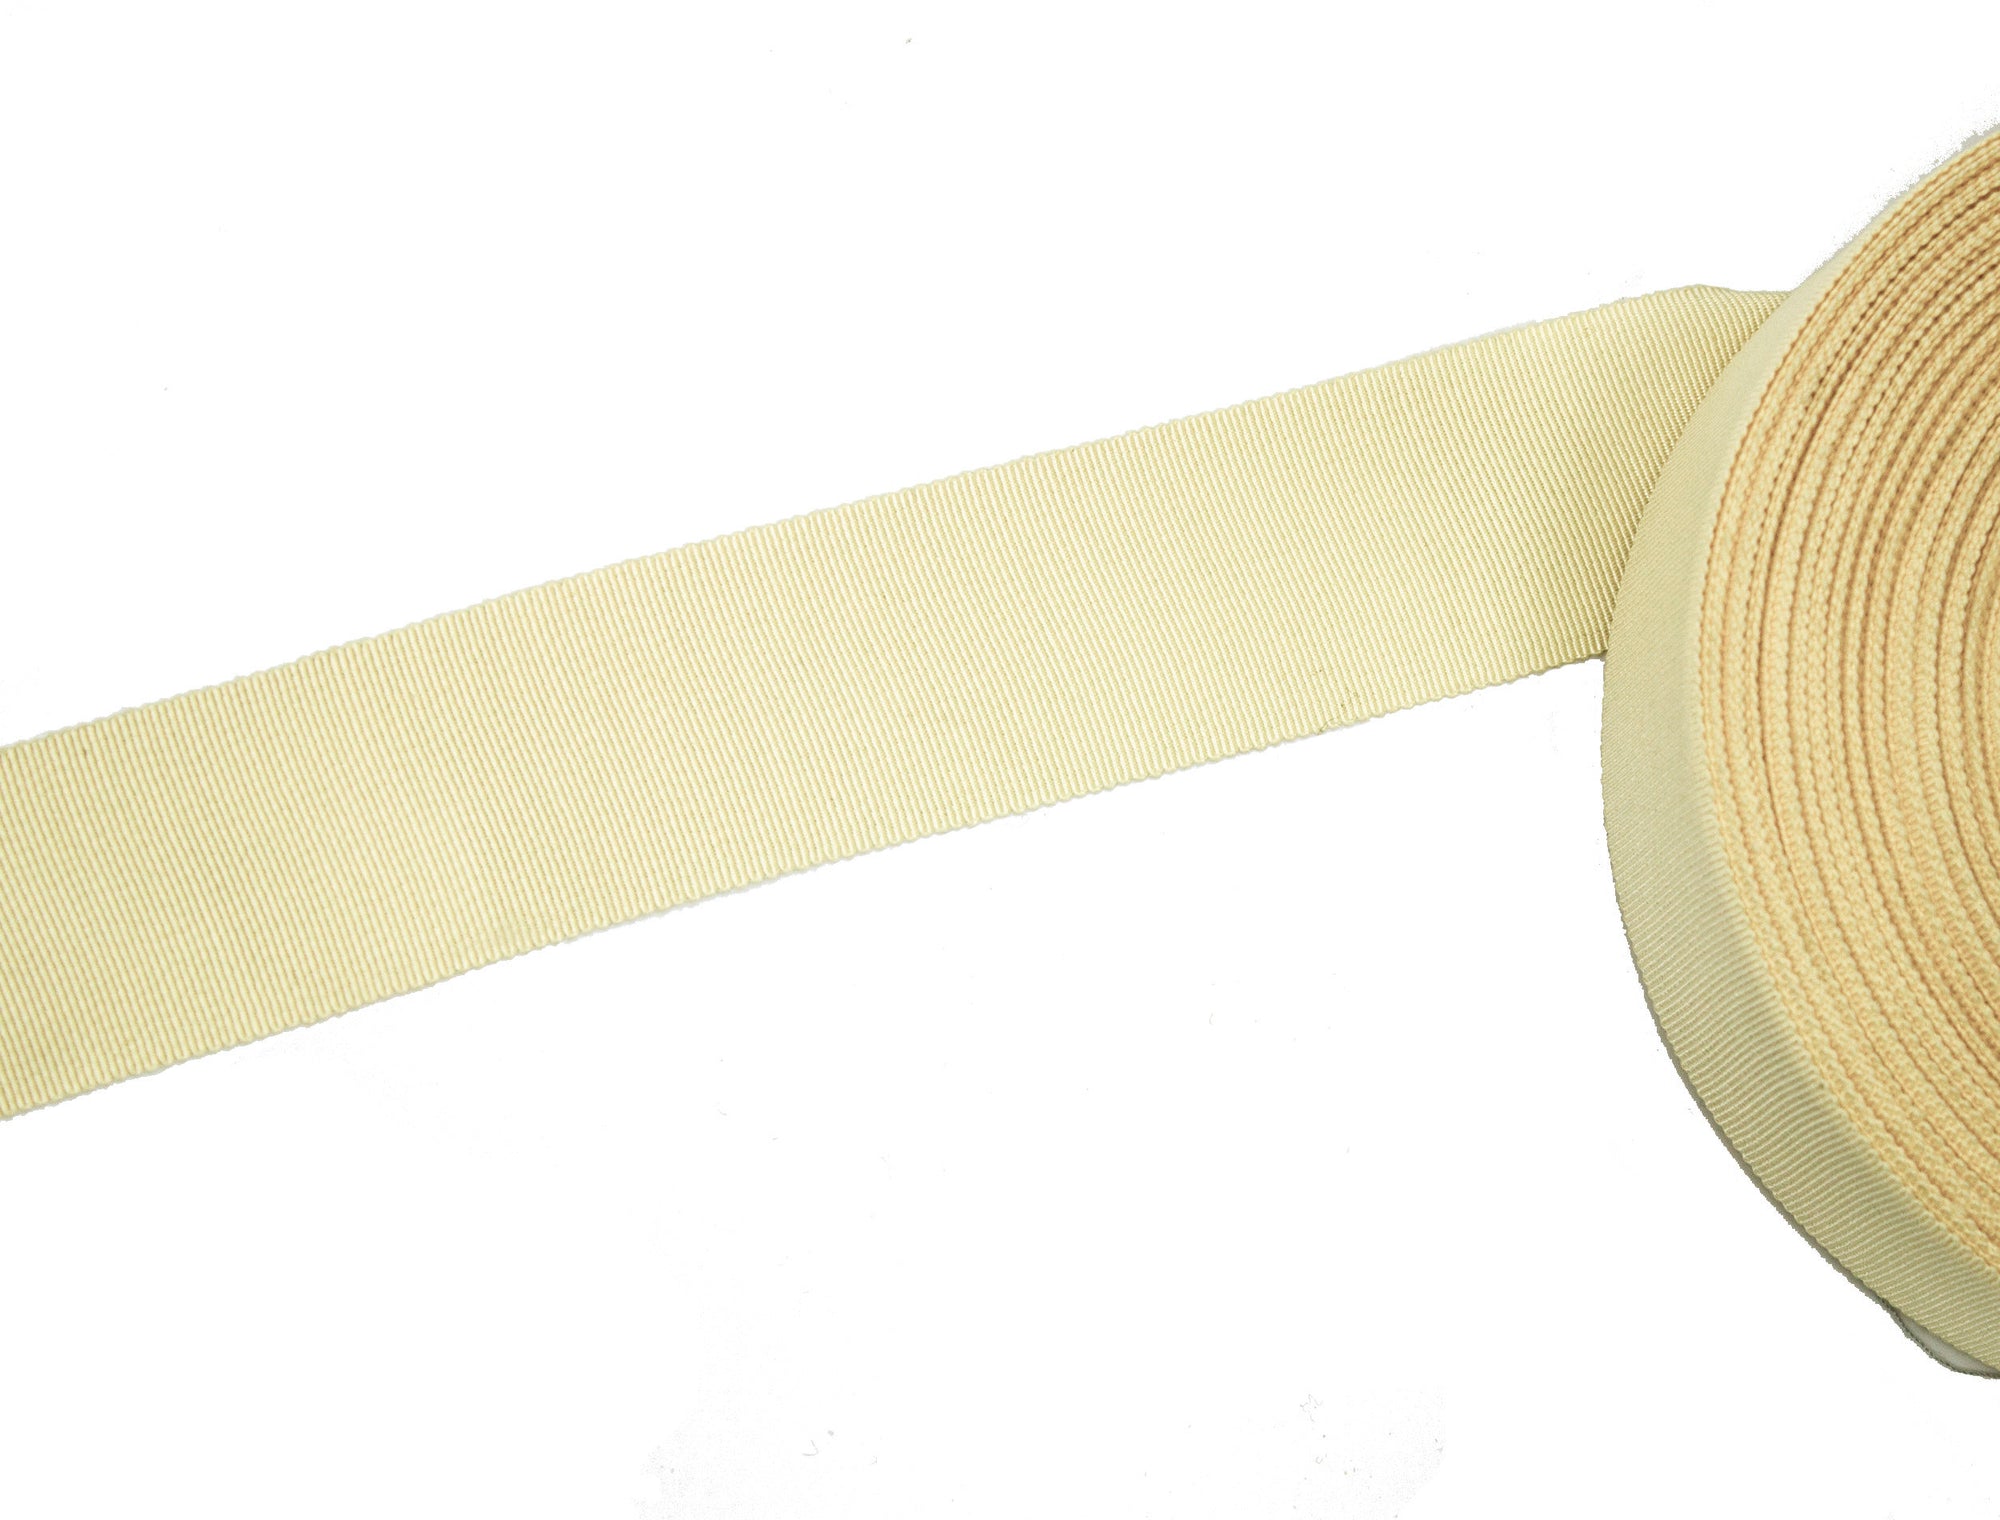 Vintage Petersham Ribbon Cream Measures 37 mm Wide - Sold by the Yard